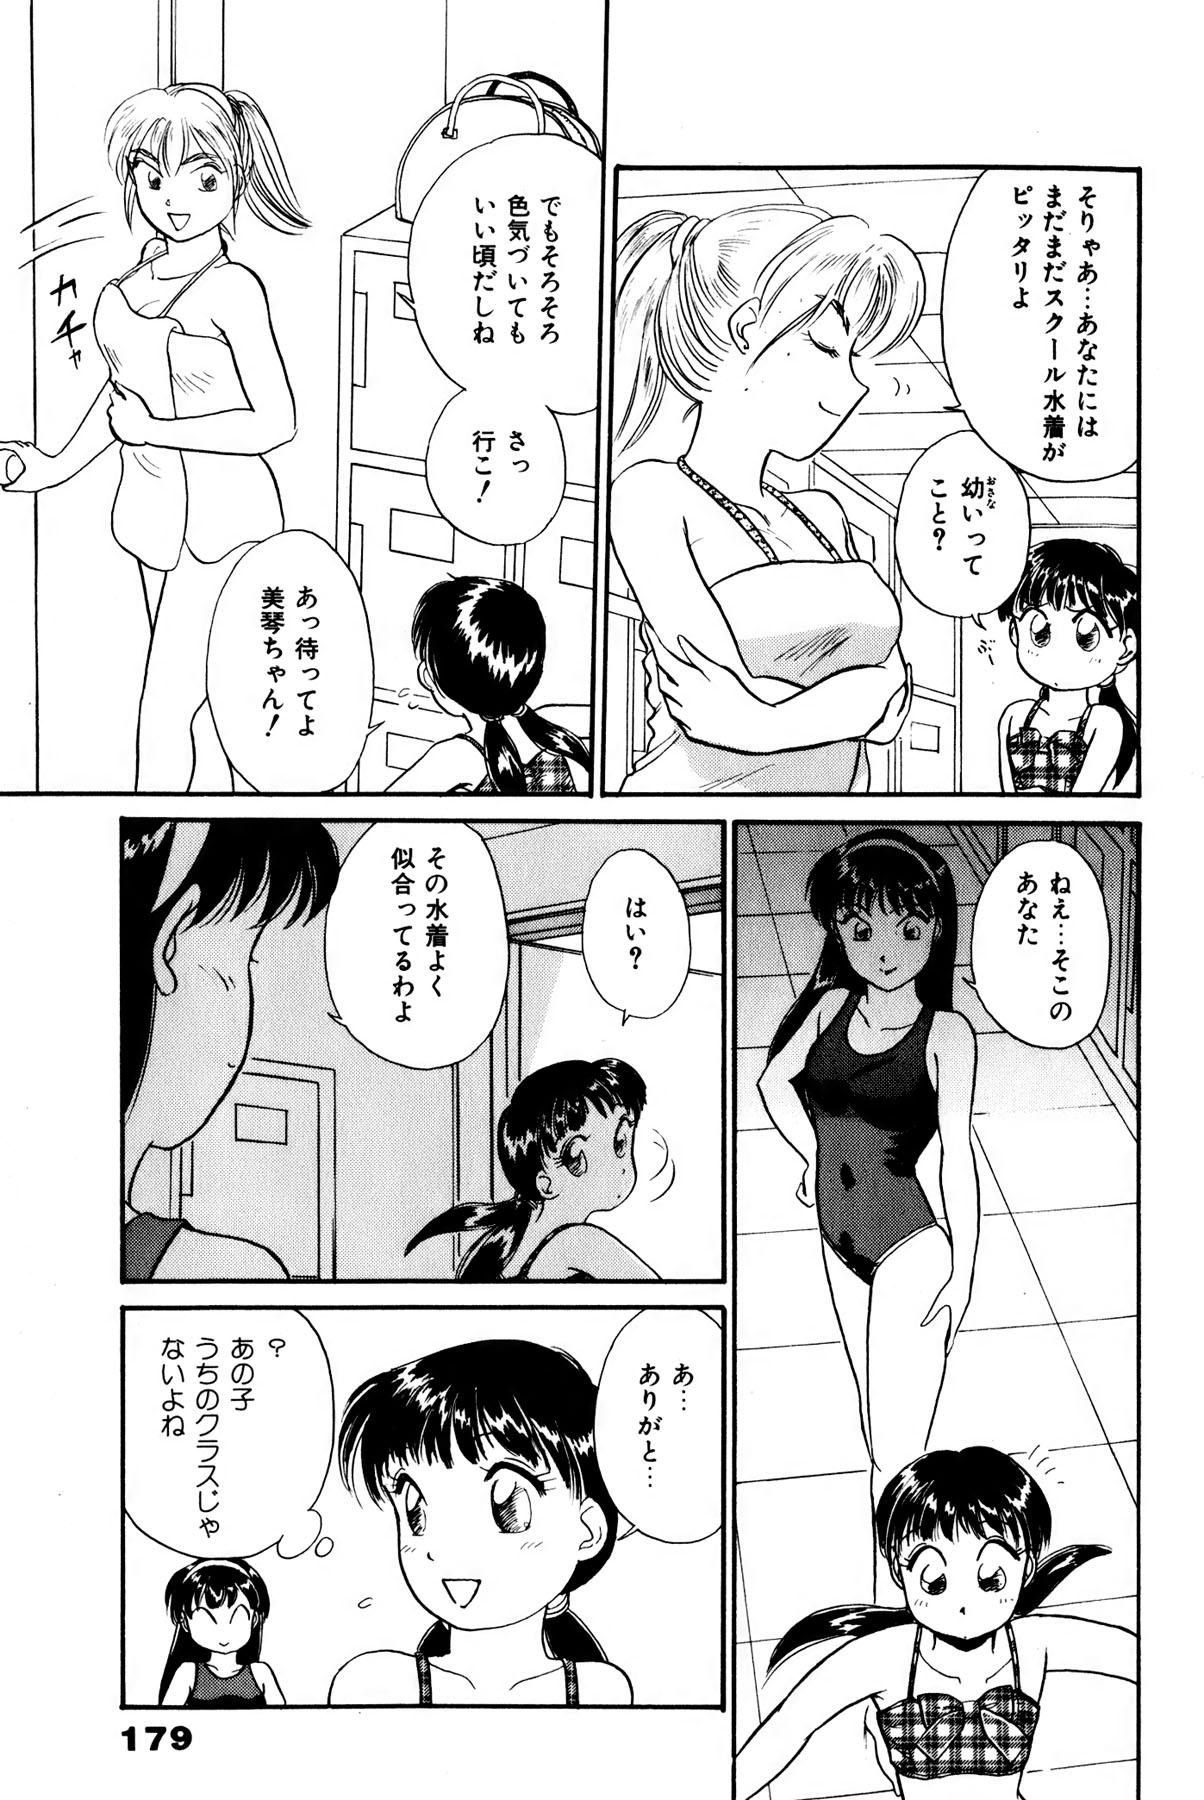 Otakara Comic 179